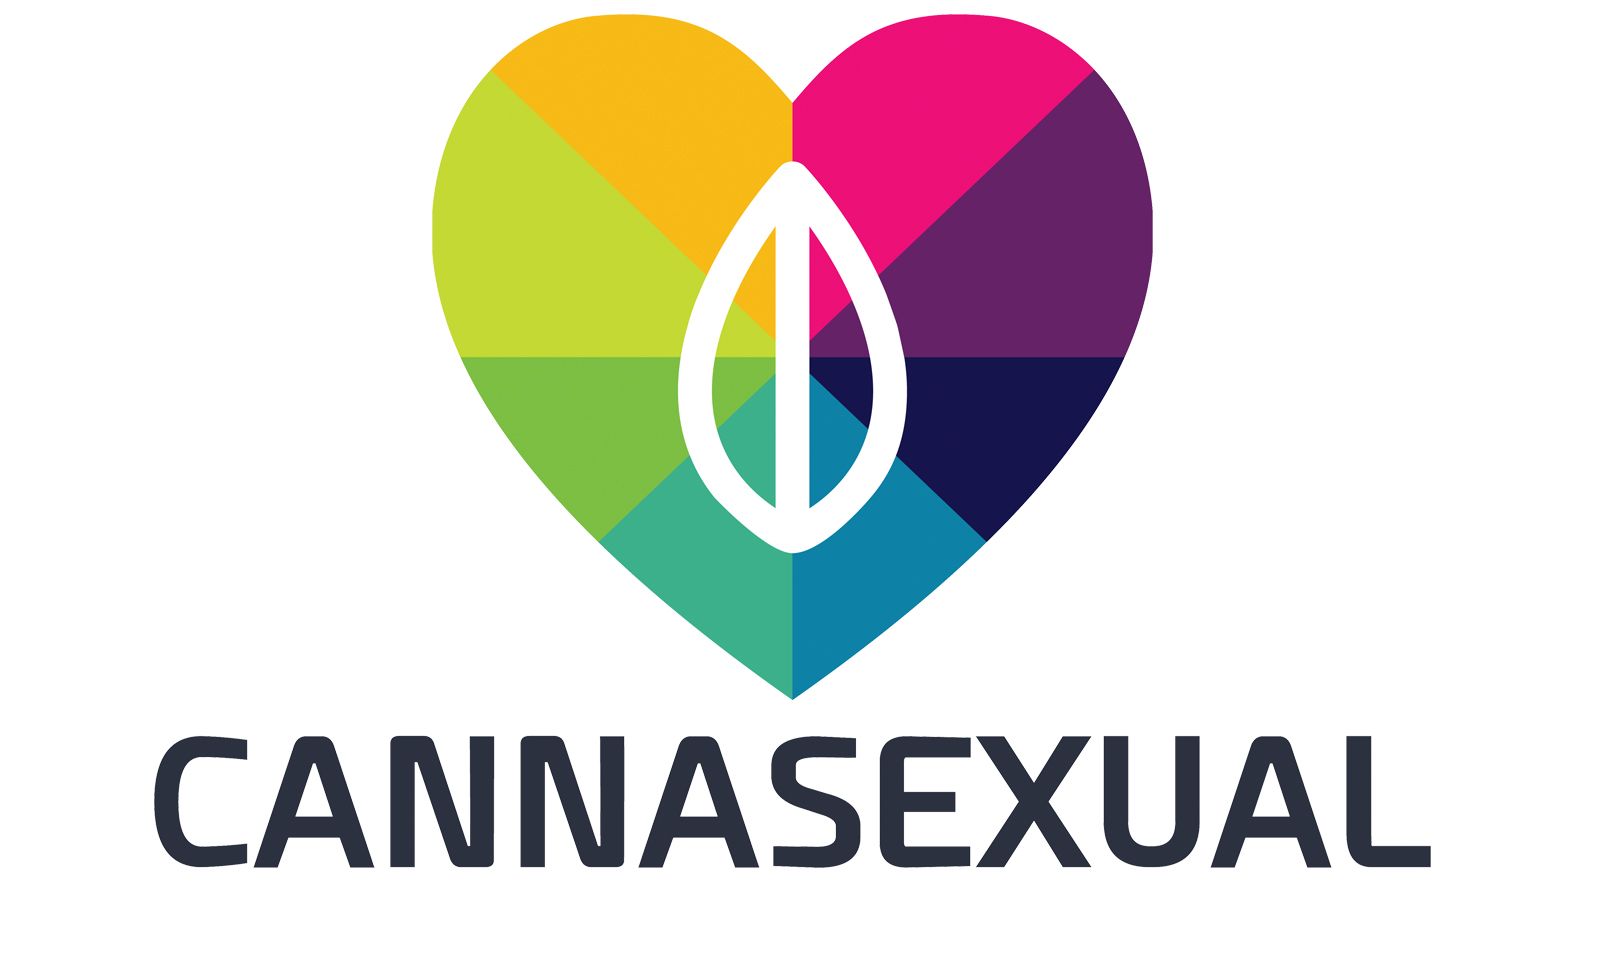 Ashley Manta Leads CannaSexual Workshop Series